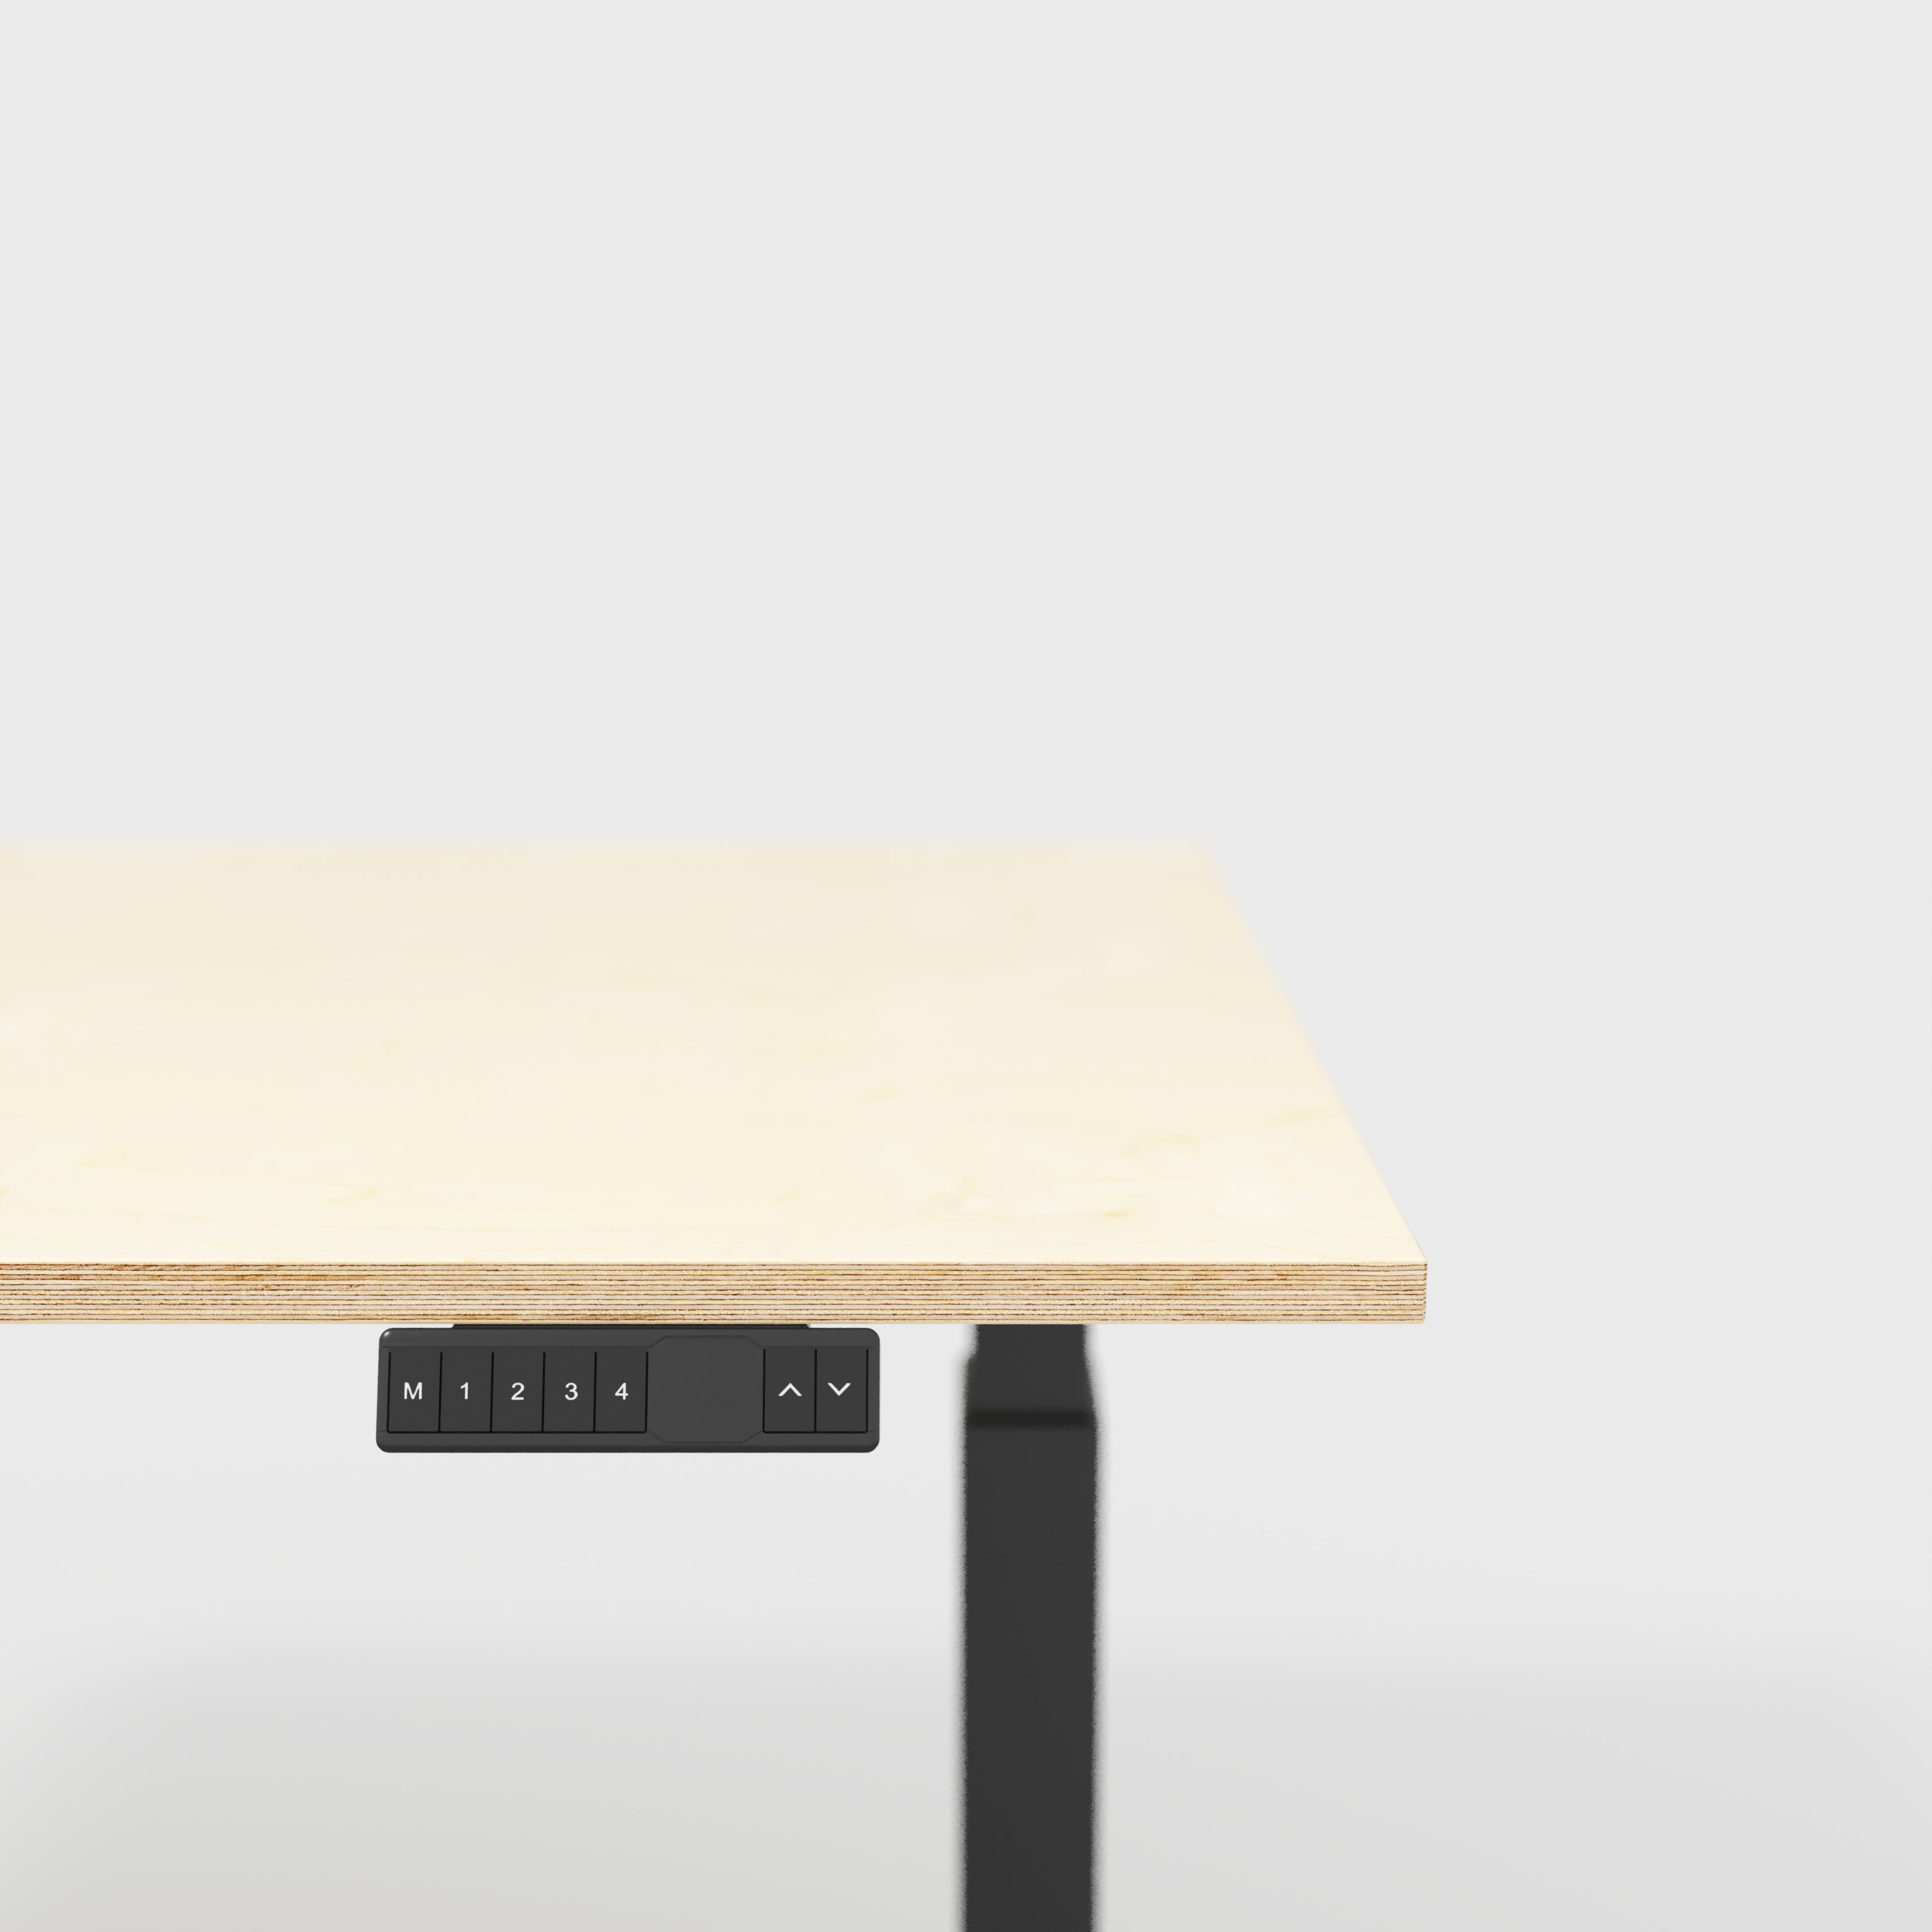 Custom Plywood Sit-Stand Desk